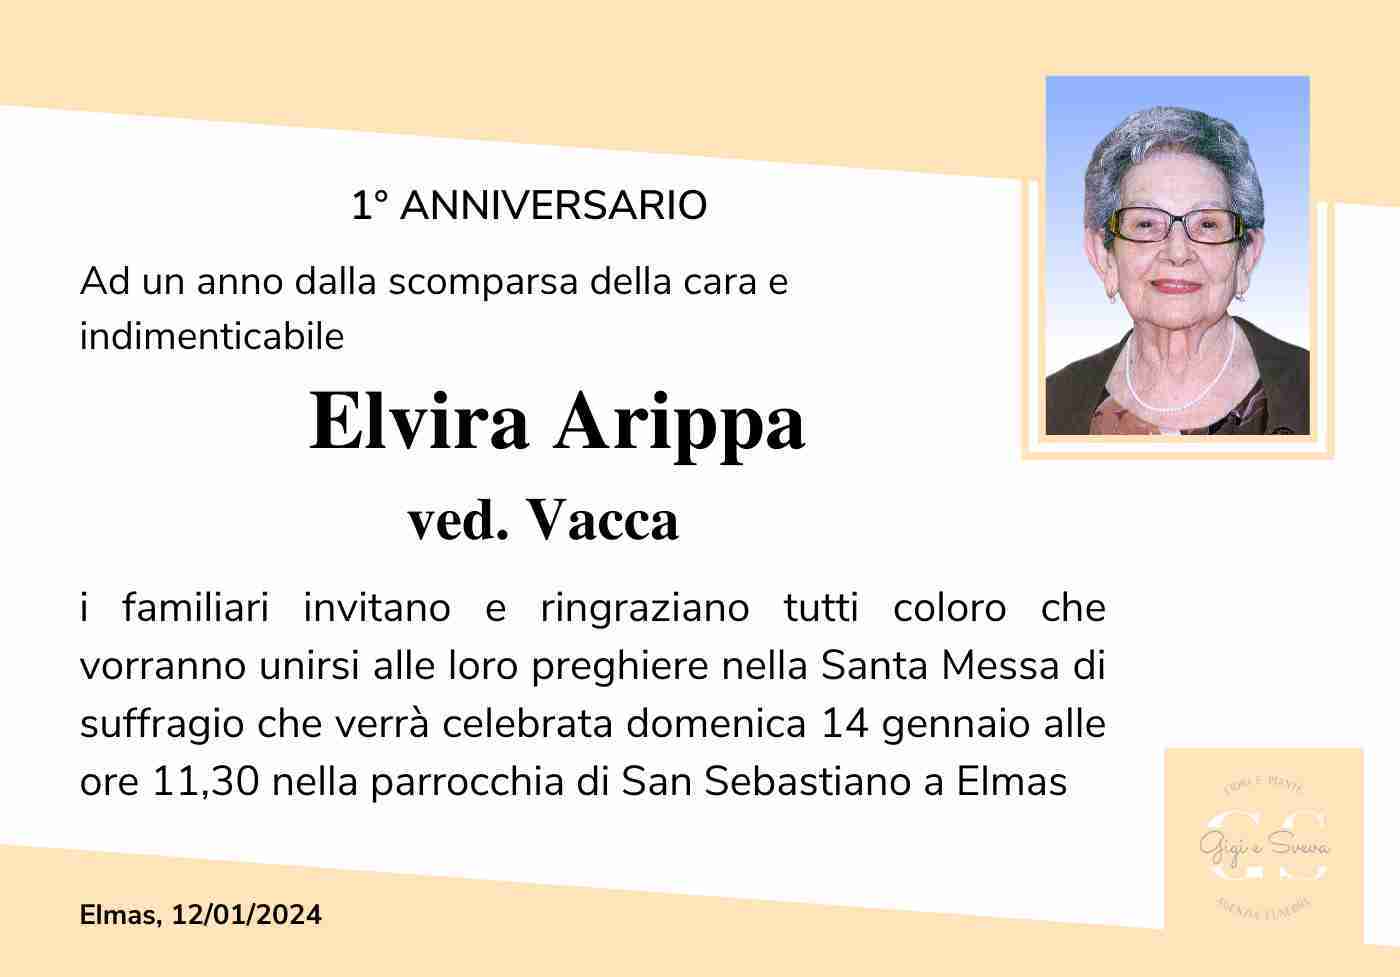 Elvira Arippa